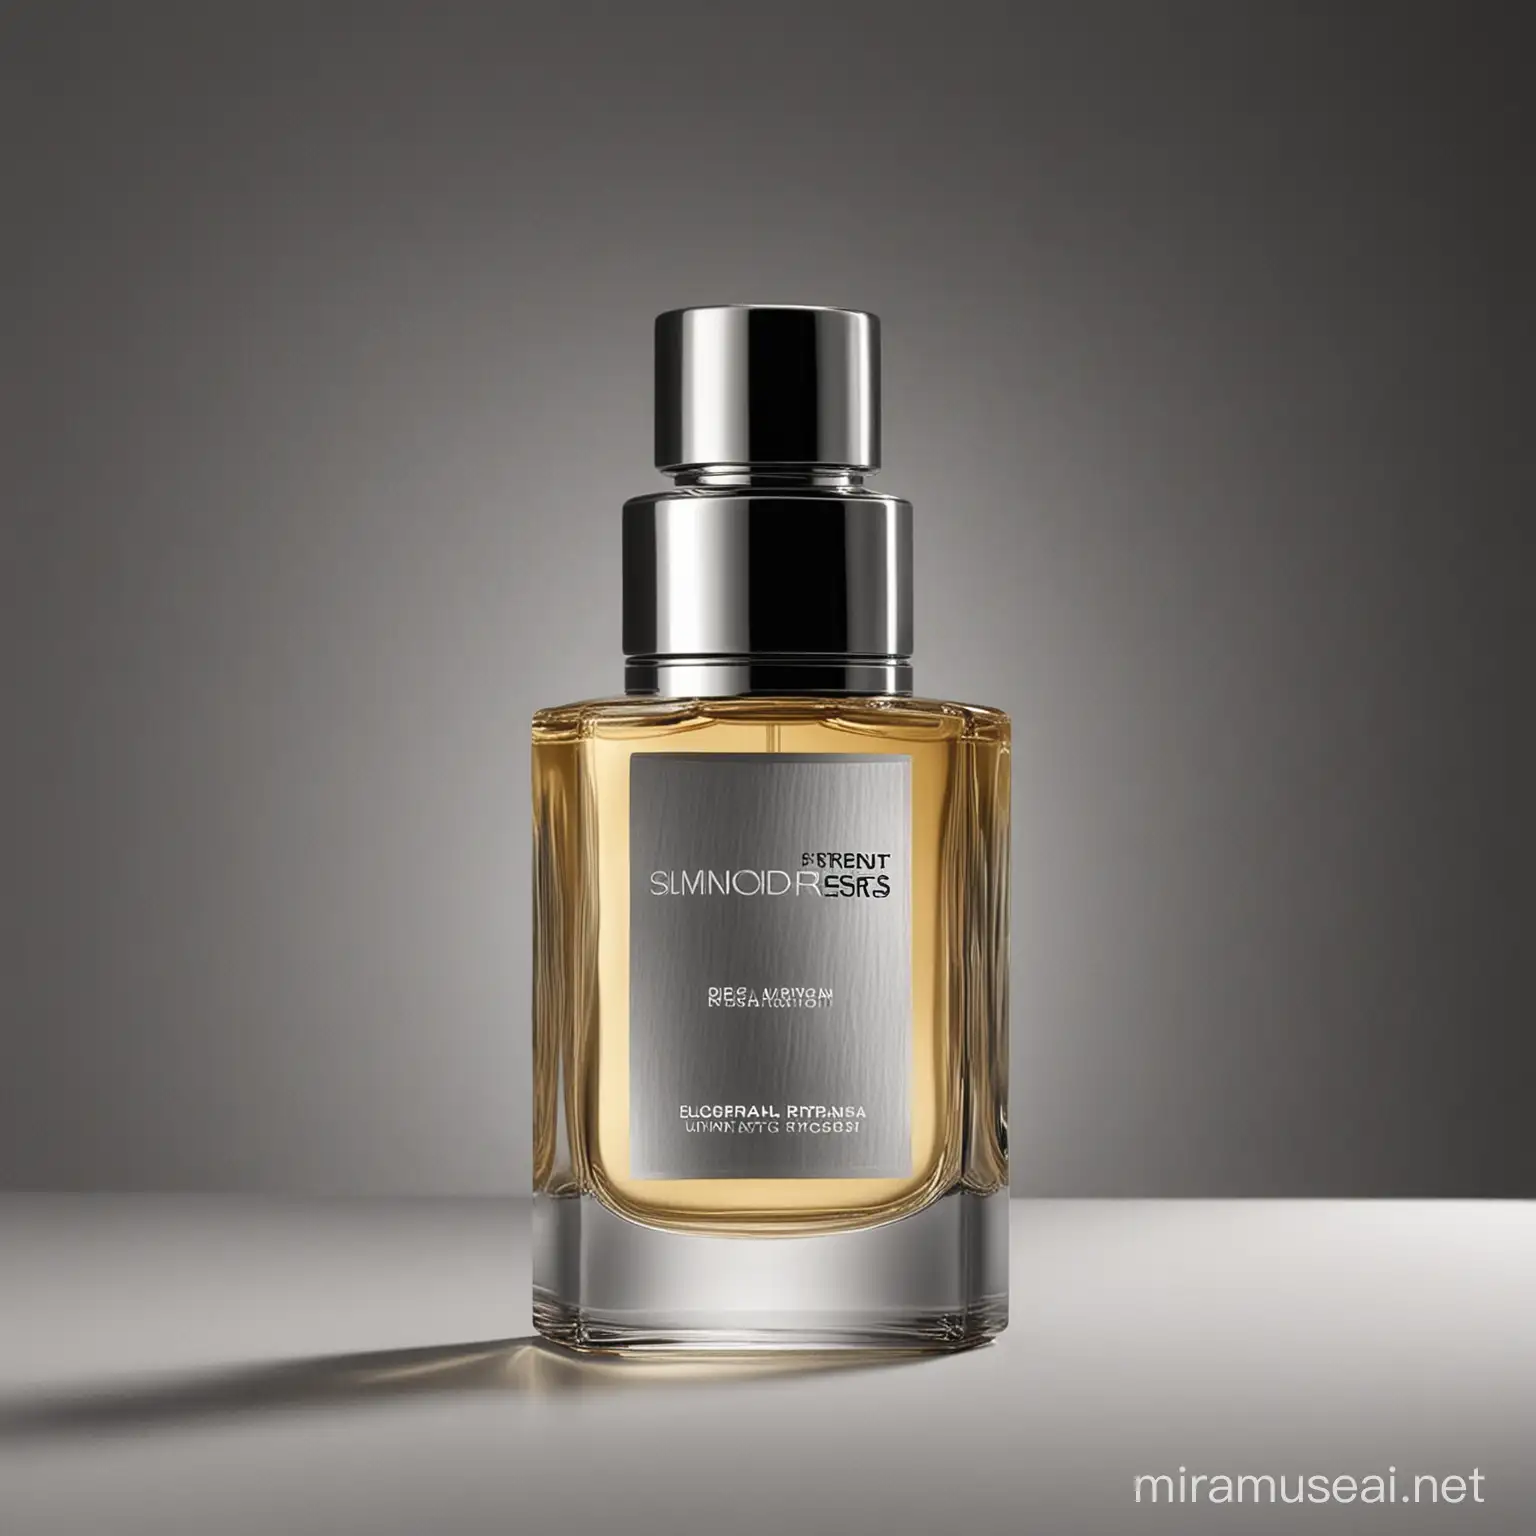 Elegant Mens Perfume Advertisement Featuring Sophisticated Cologne Bottles